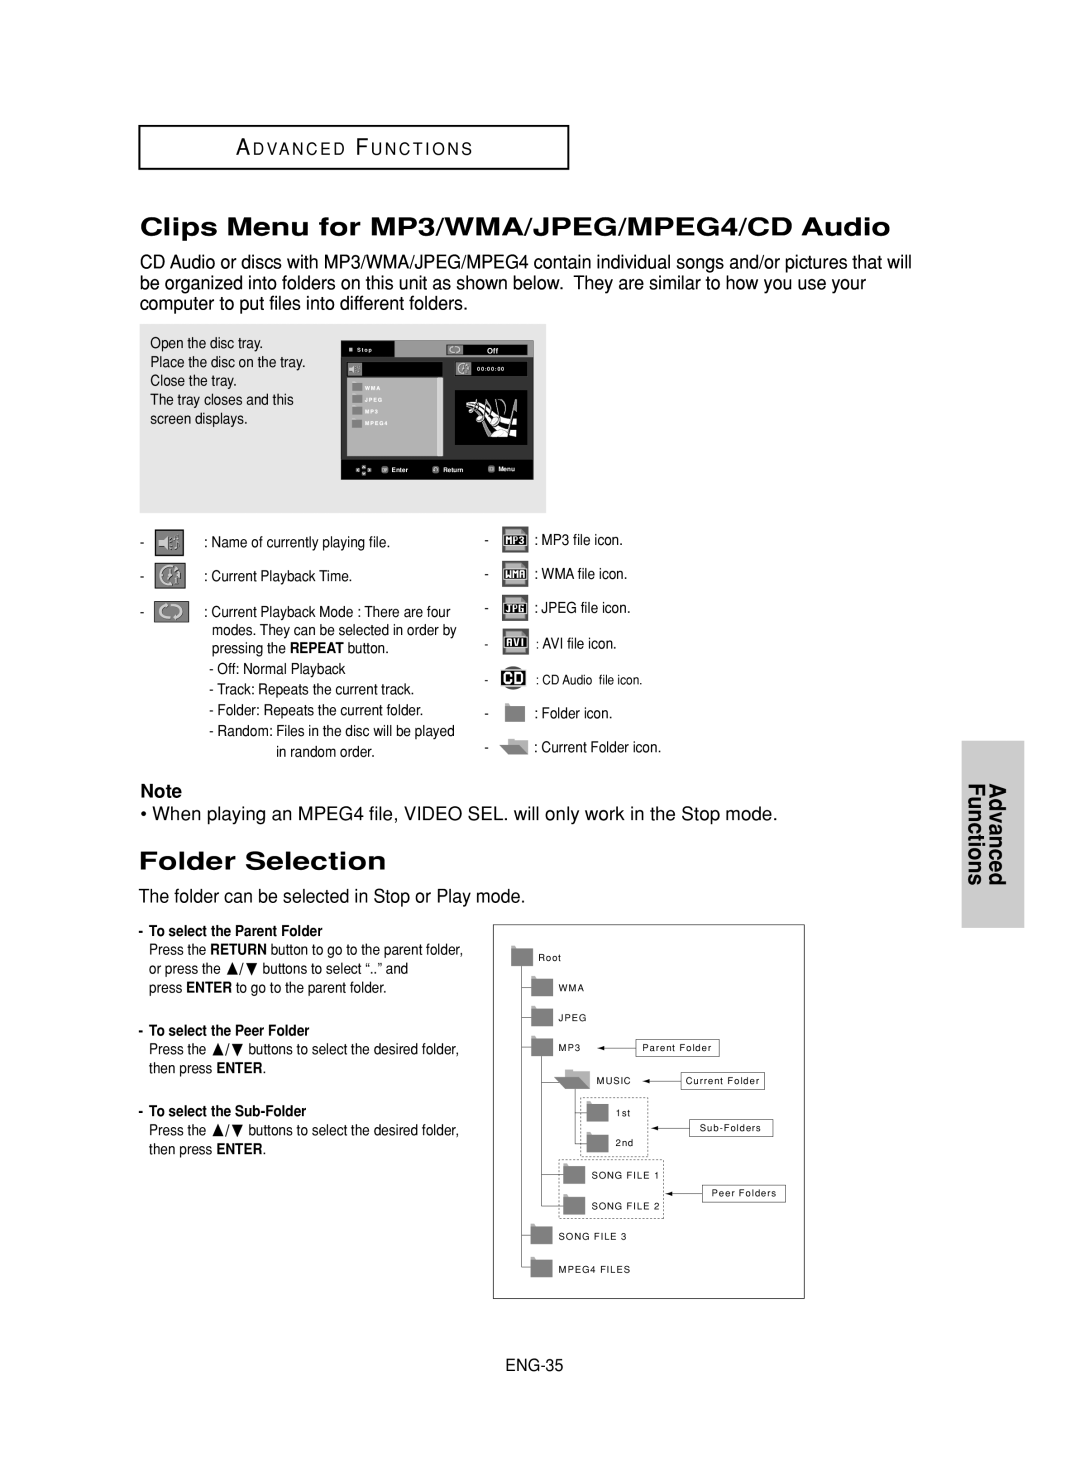 Samsung DVD-F1080, DVD-FP580 manual Clips Menu for MP3/WMA/JPEG/MPEG4/CD Audio, Folder Selection, Advanced Functions, ENG-35 